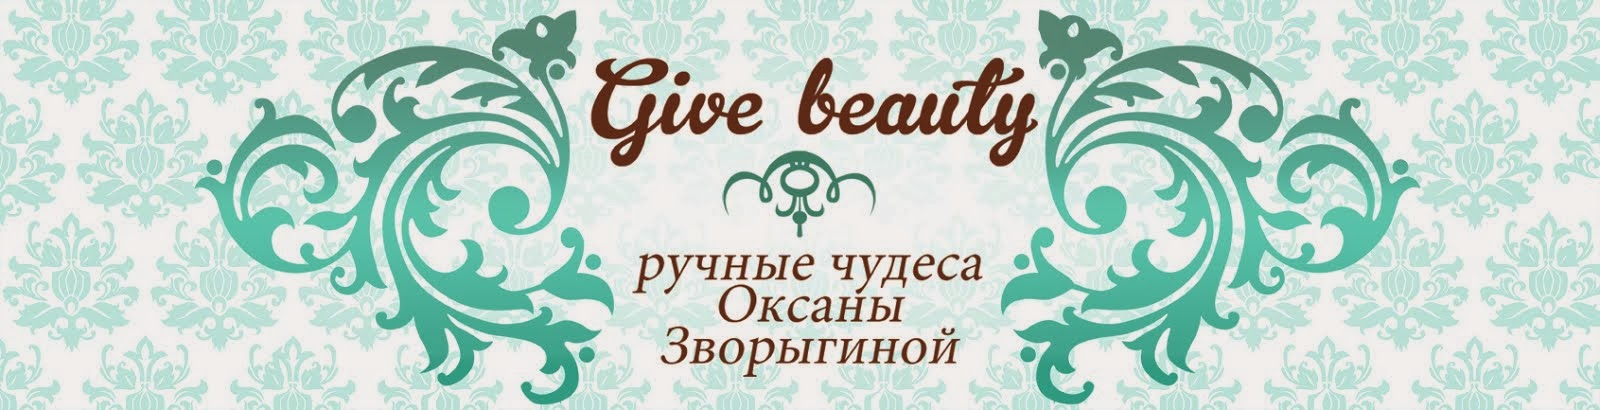 Give Beauty